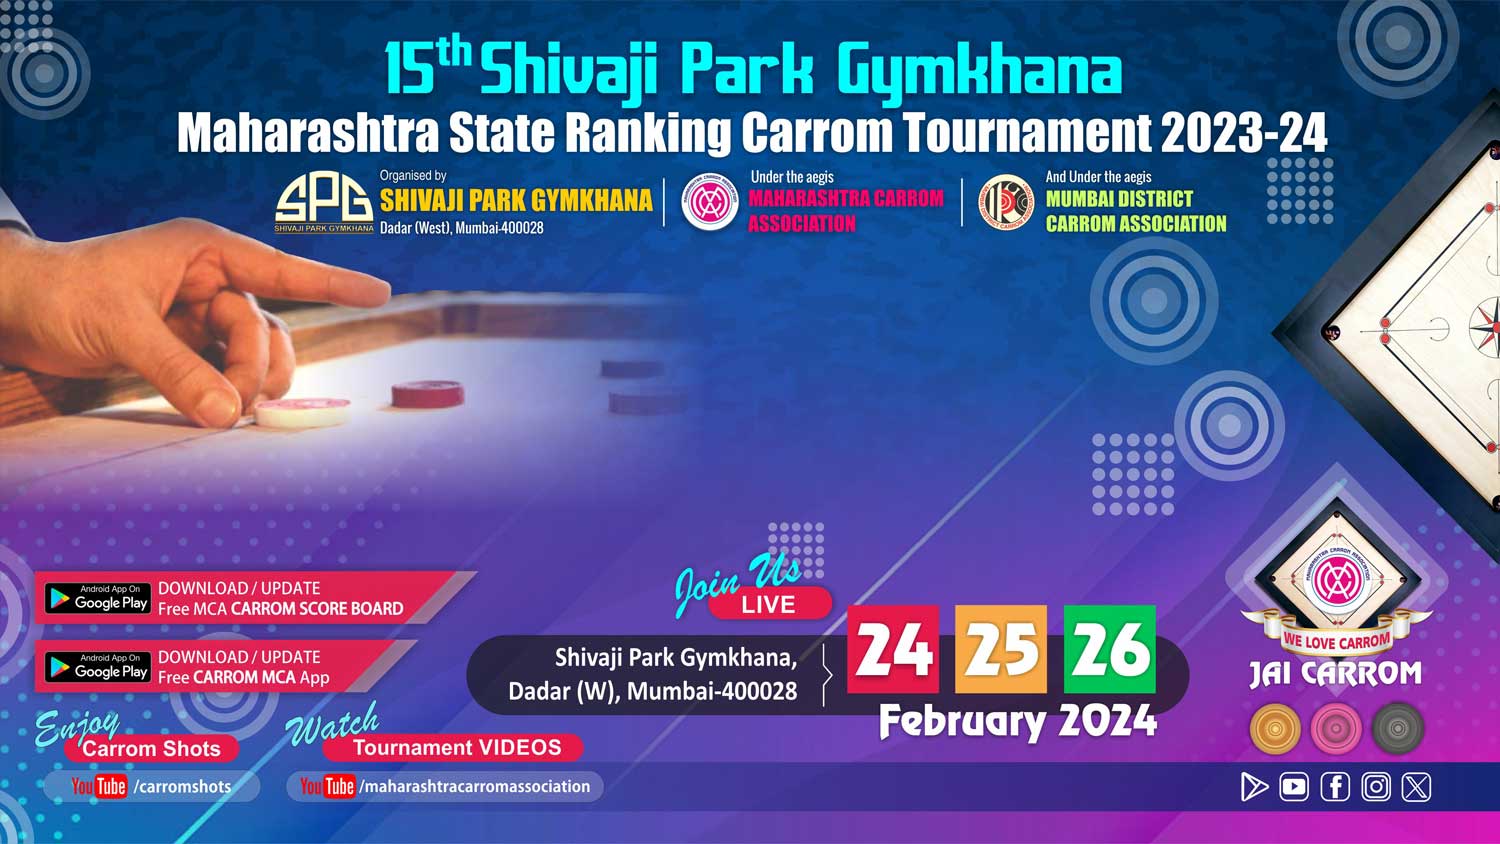 15th Shivaji Park Gymkhana Maharashtra State Ranking Carrom Tournament 2023-2024